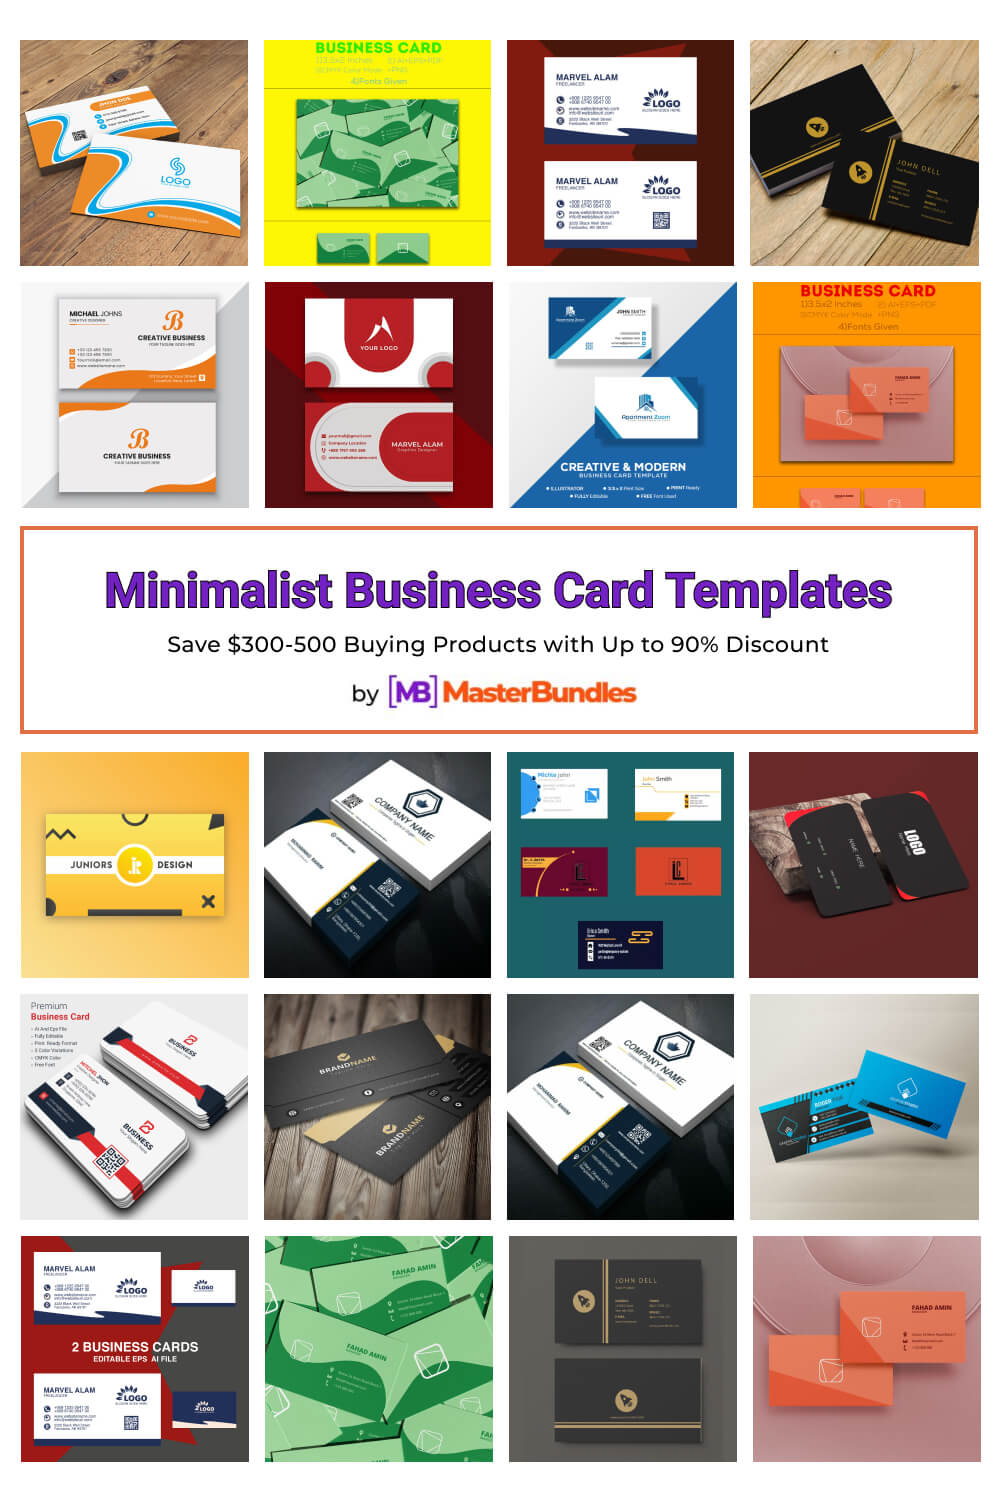 minimalist business card templates pinterest image.